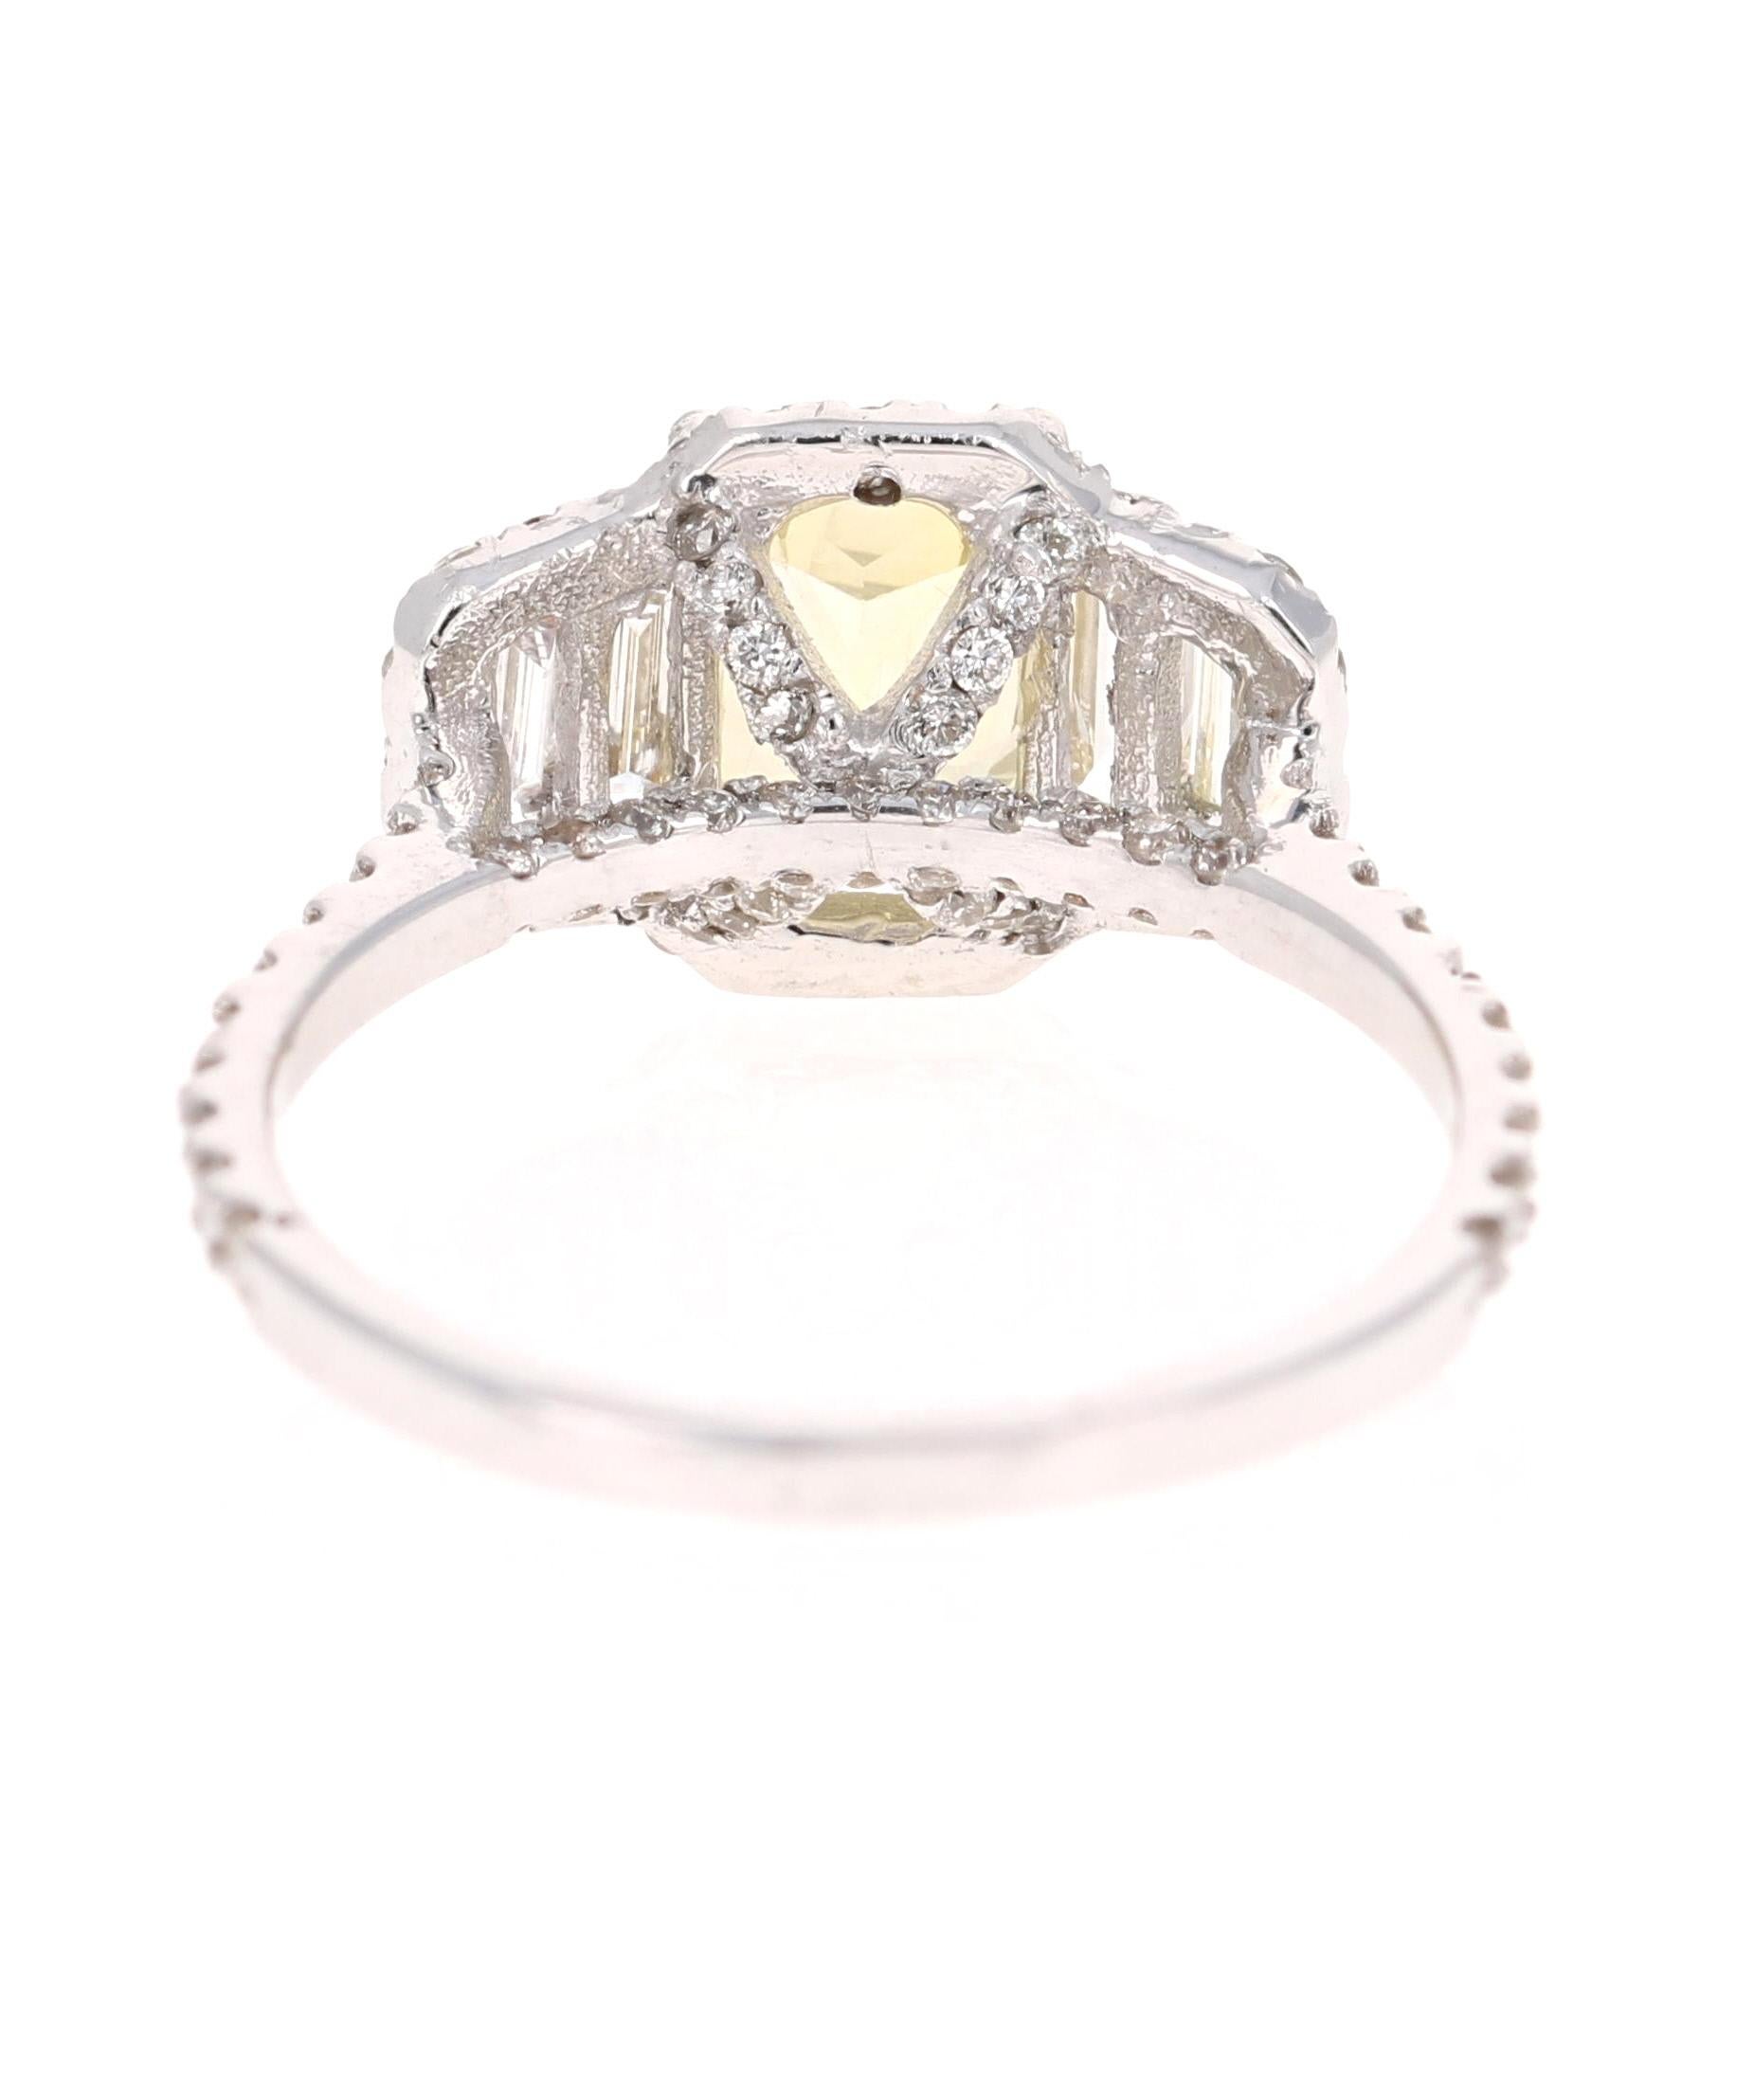 Emerald Cut GIA Certified 3.11 Carat Yellow Sapphire Diamond 18 Karat White Gold Ring